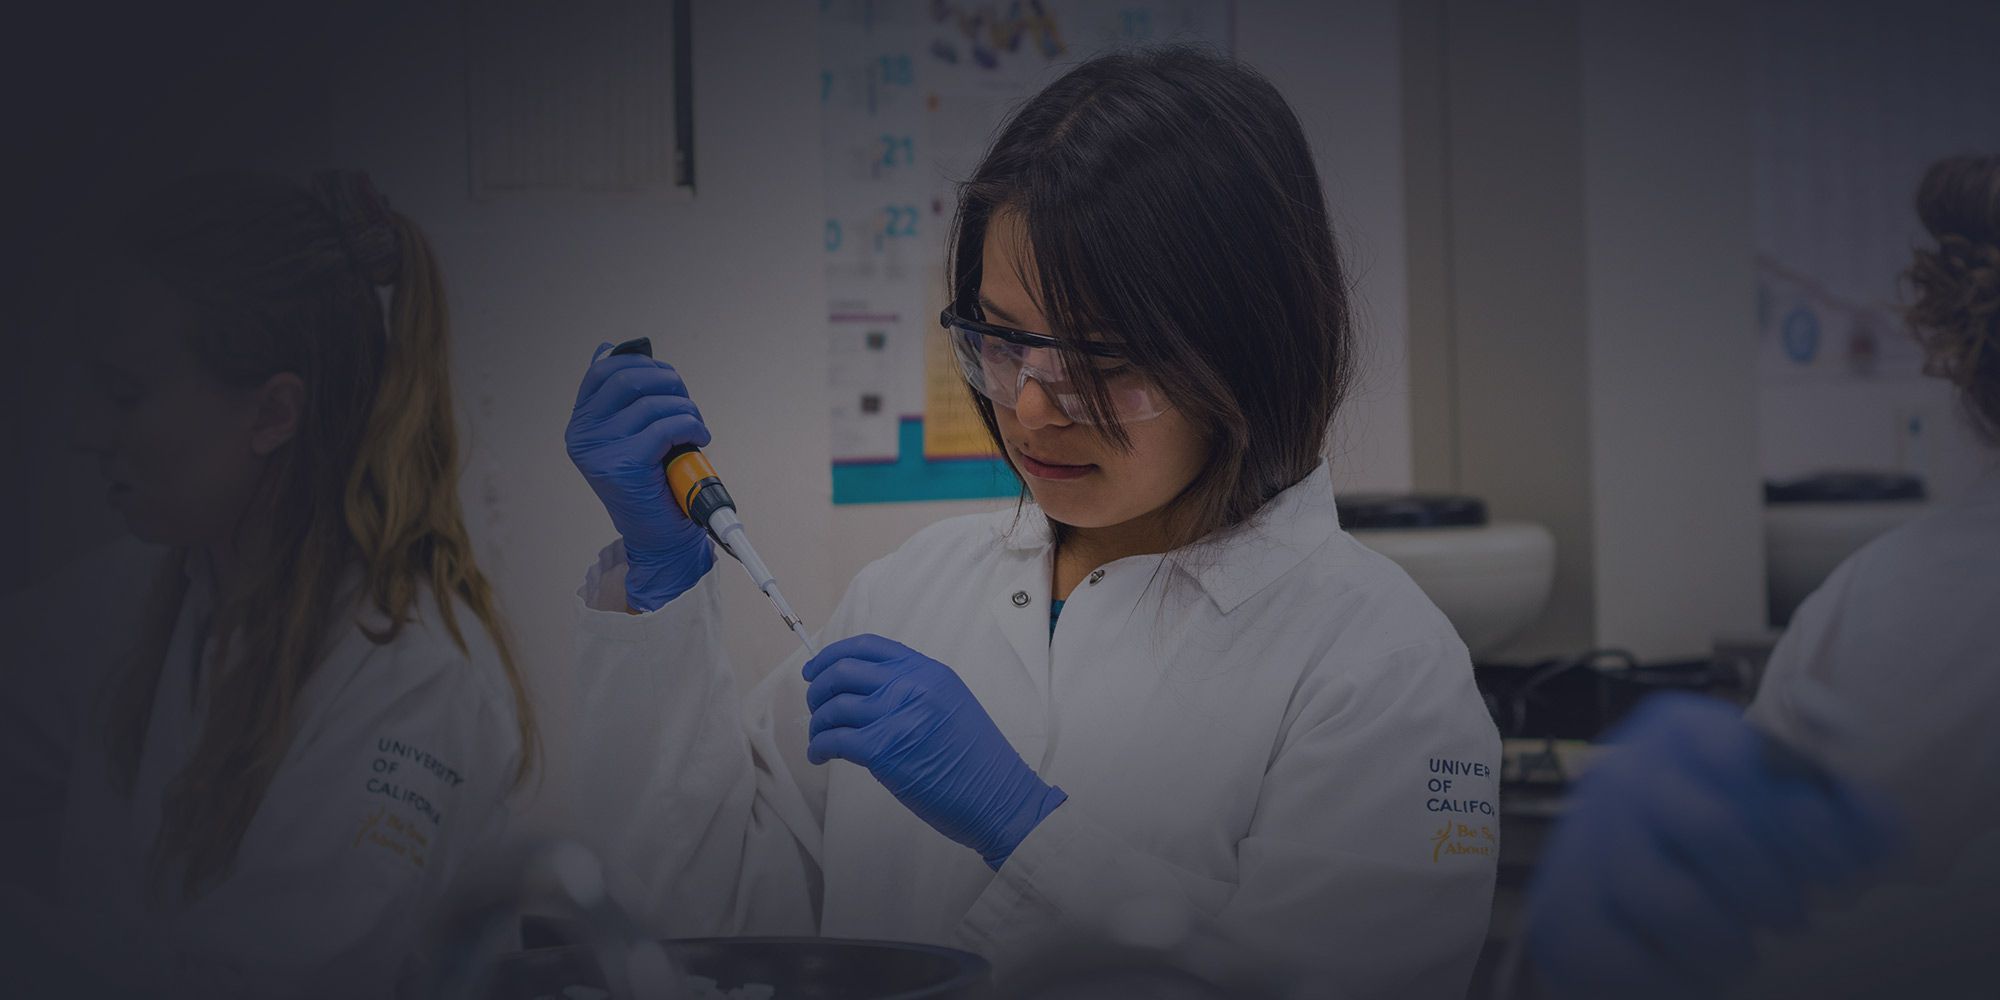 An undergraduate performs an experiment for the IGI's CRISPR course at UC Berkeley